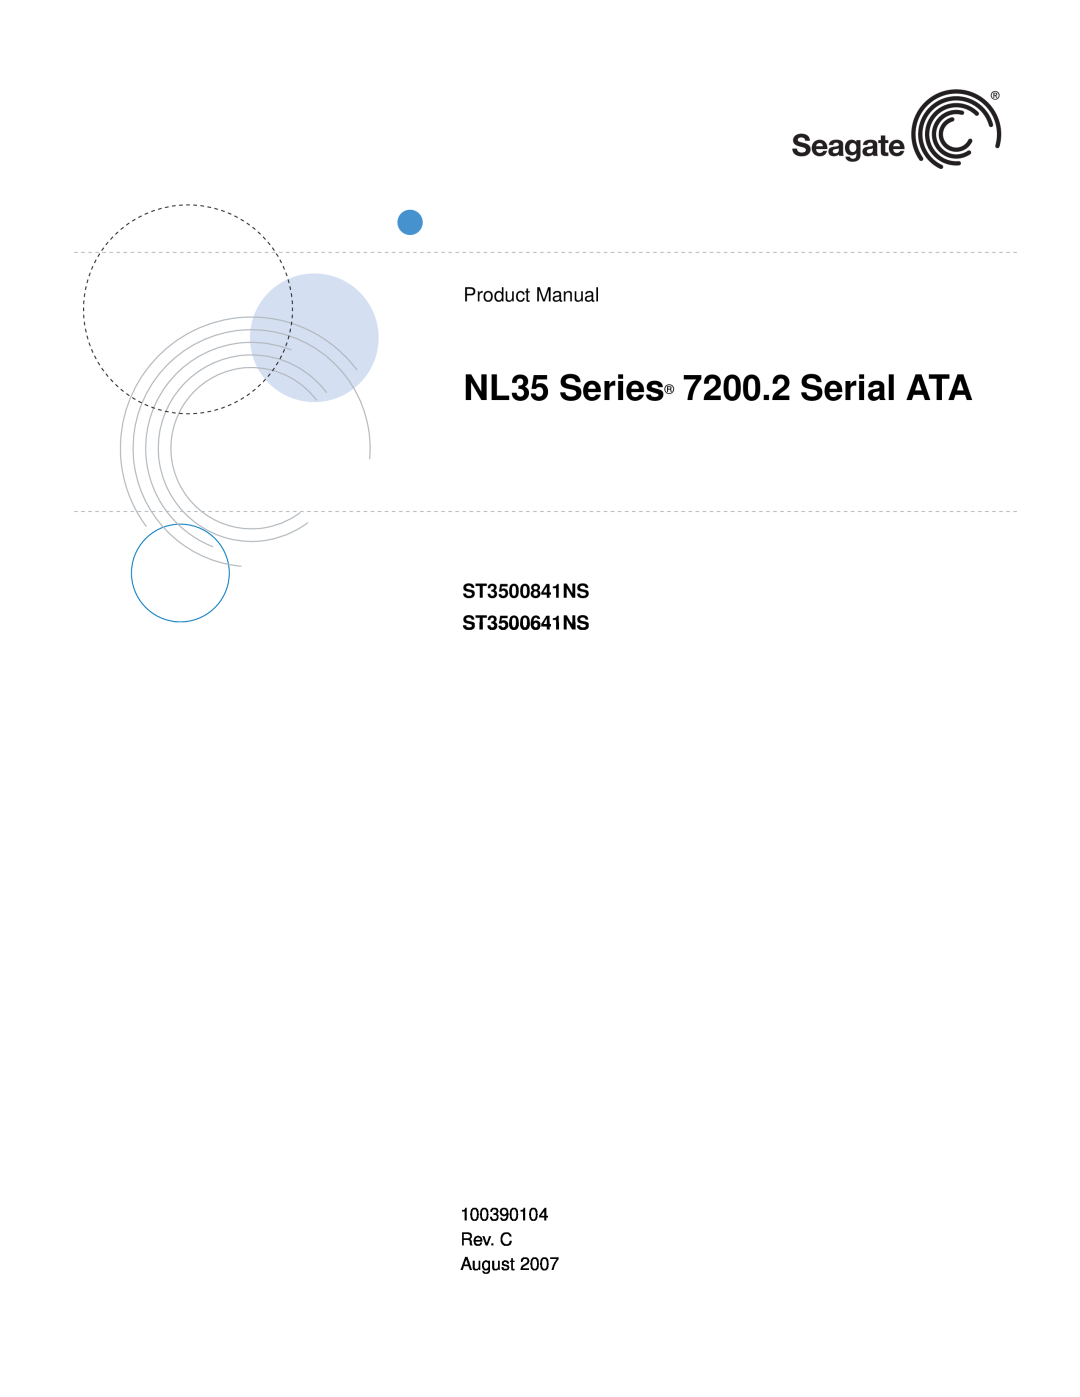 Seagate manual ST3500841NS ST3500641NS, NL35 Series 7200.2 Serial ATA, Product Manual 